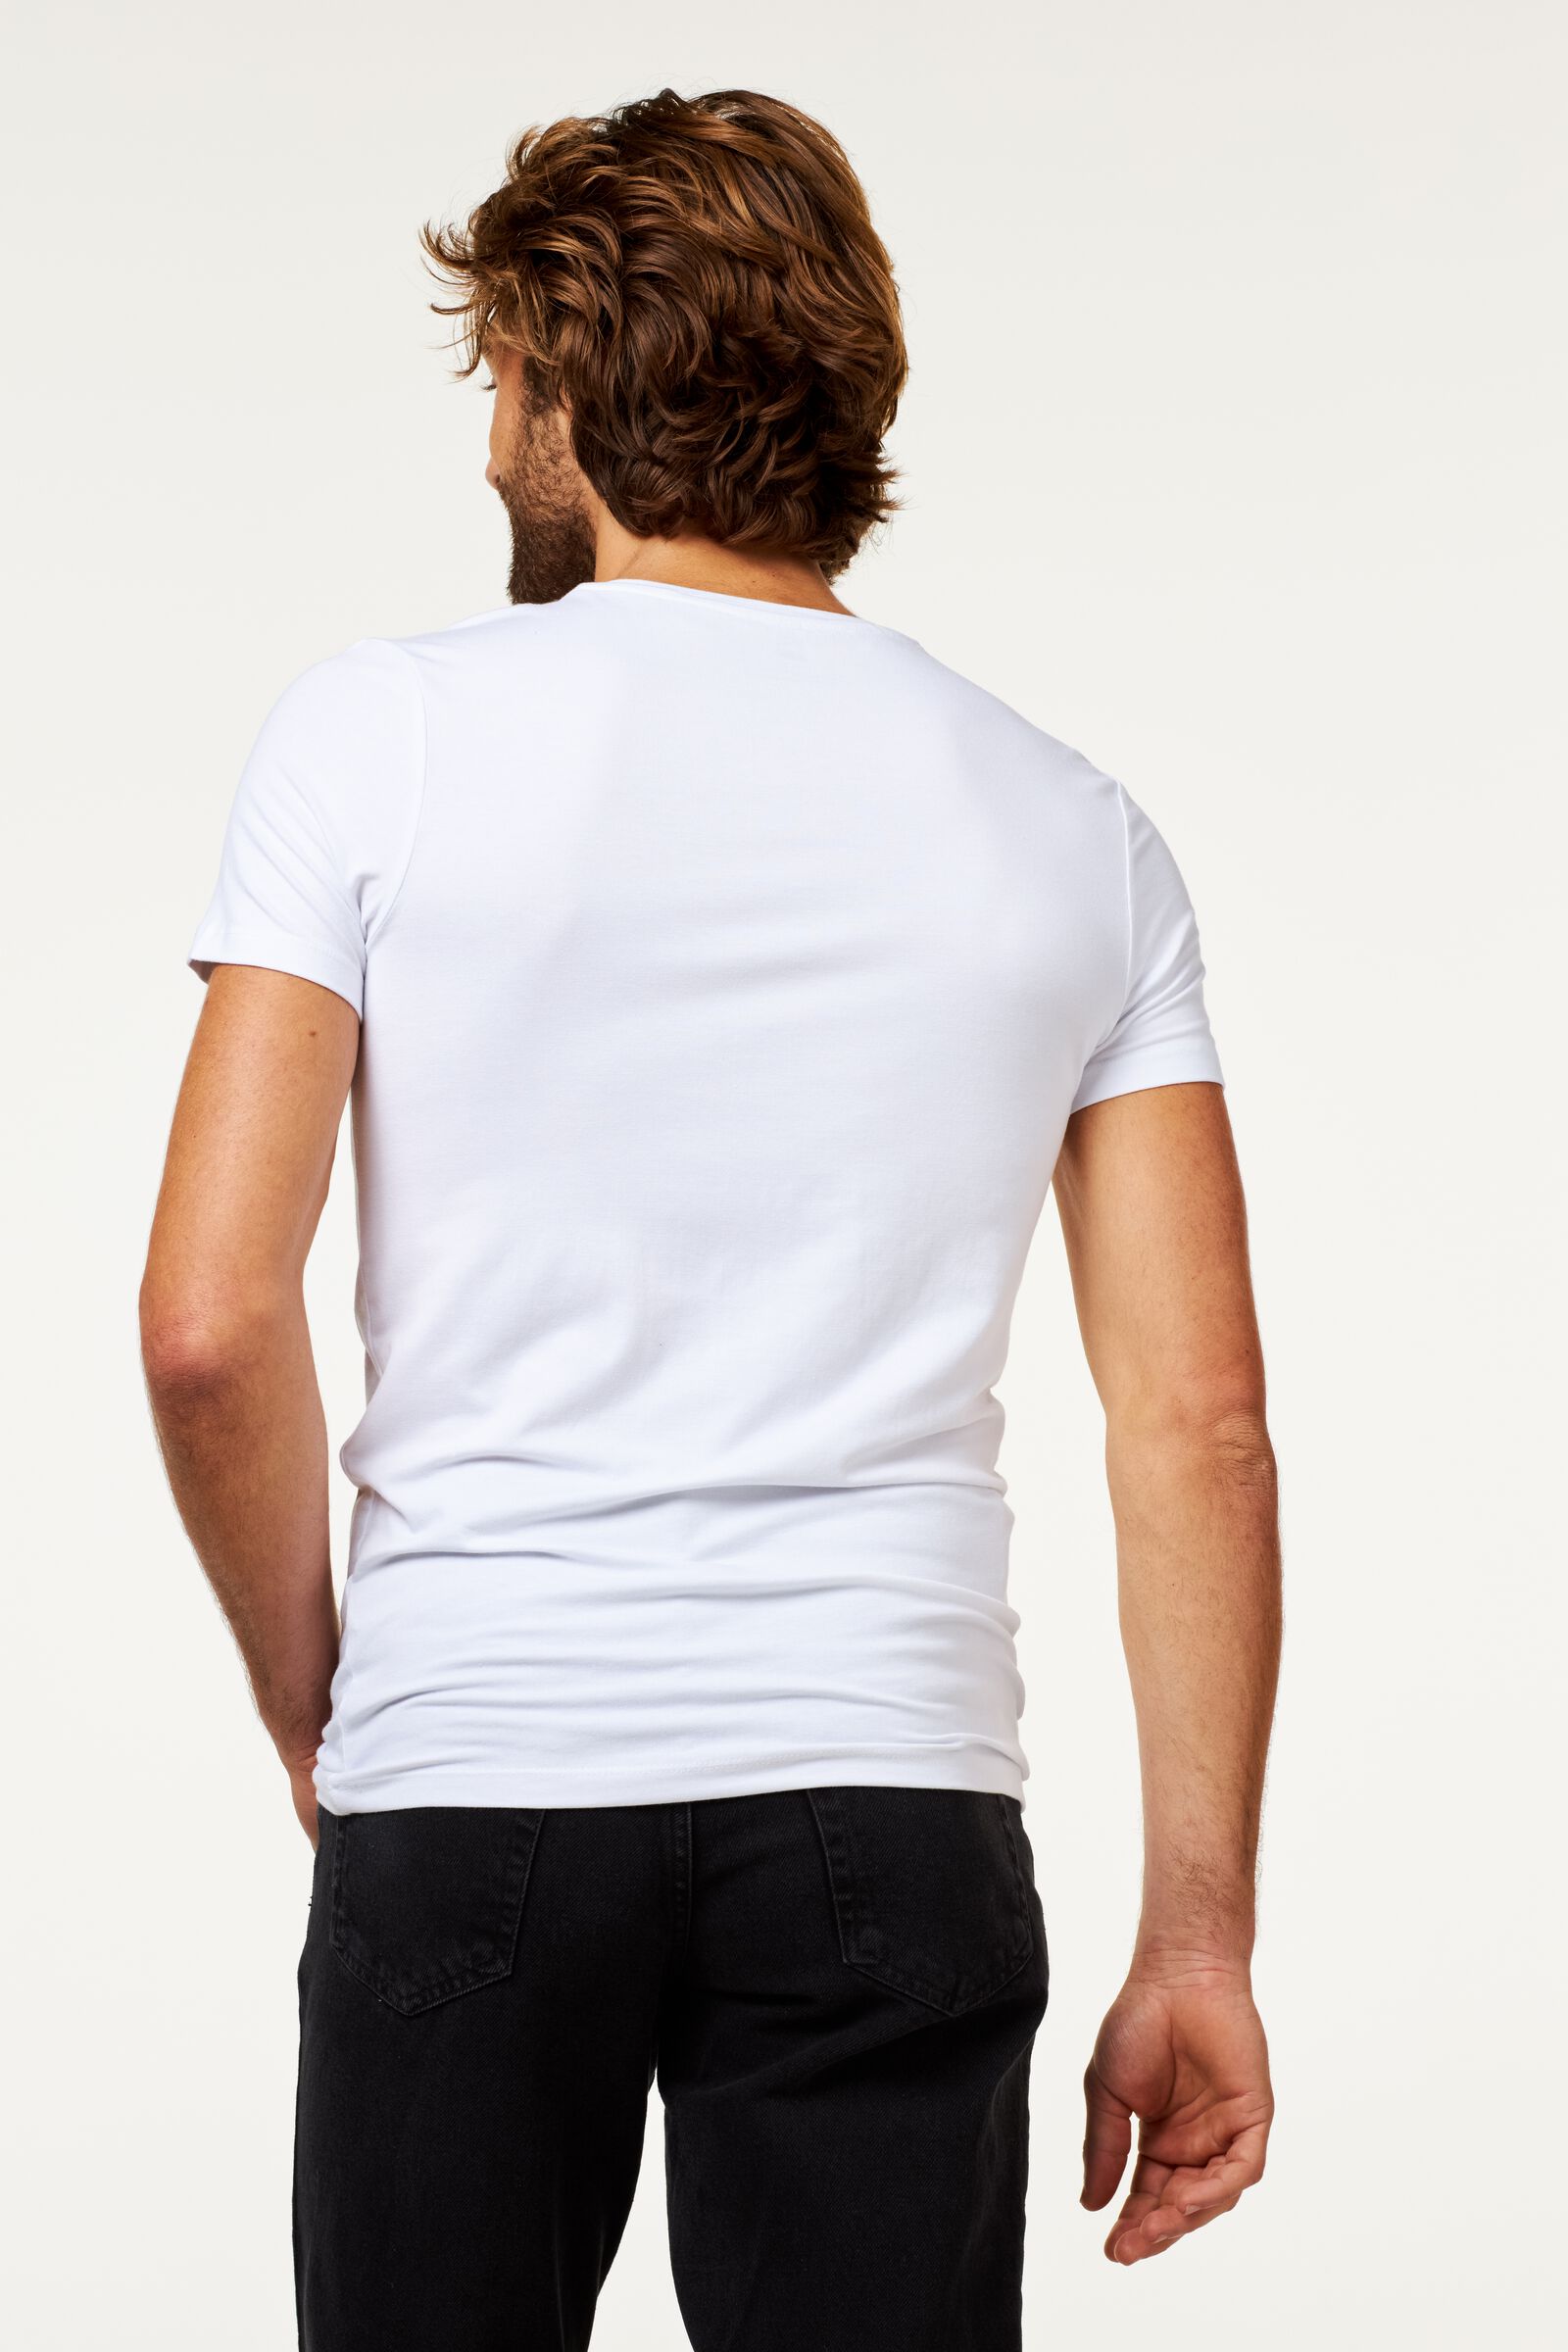 Herren-T-Shirt, Slim Fit, V-Ausschnitt, Bambus weiß L - 34282522 - HEMA